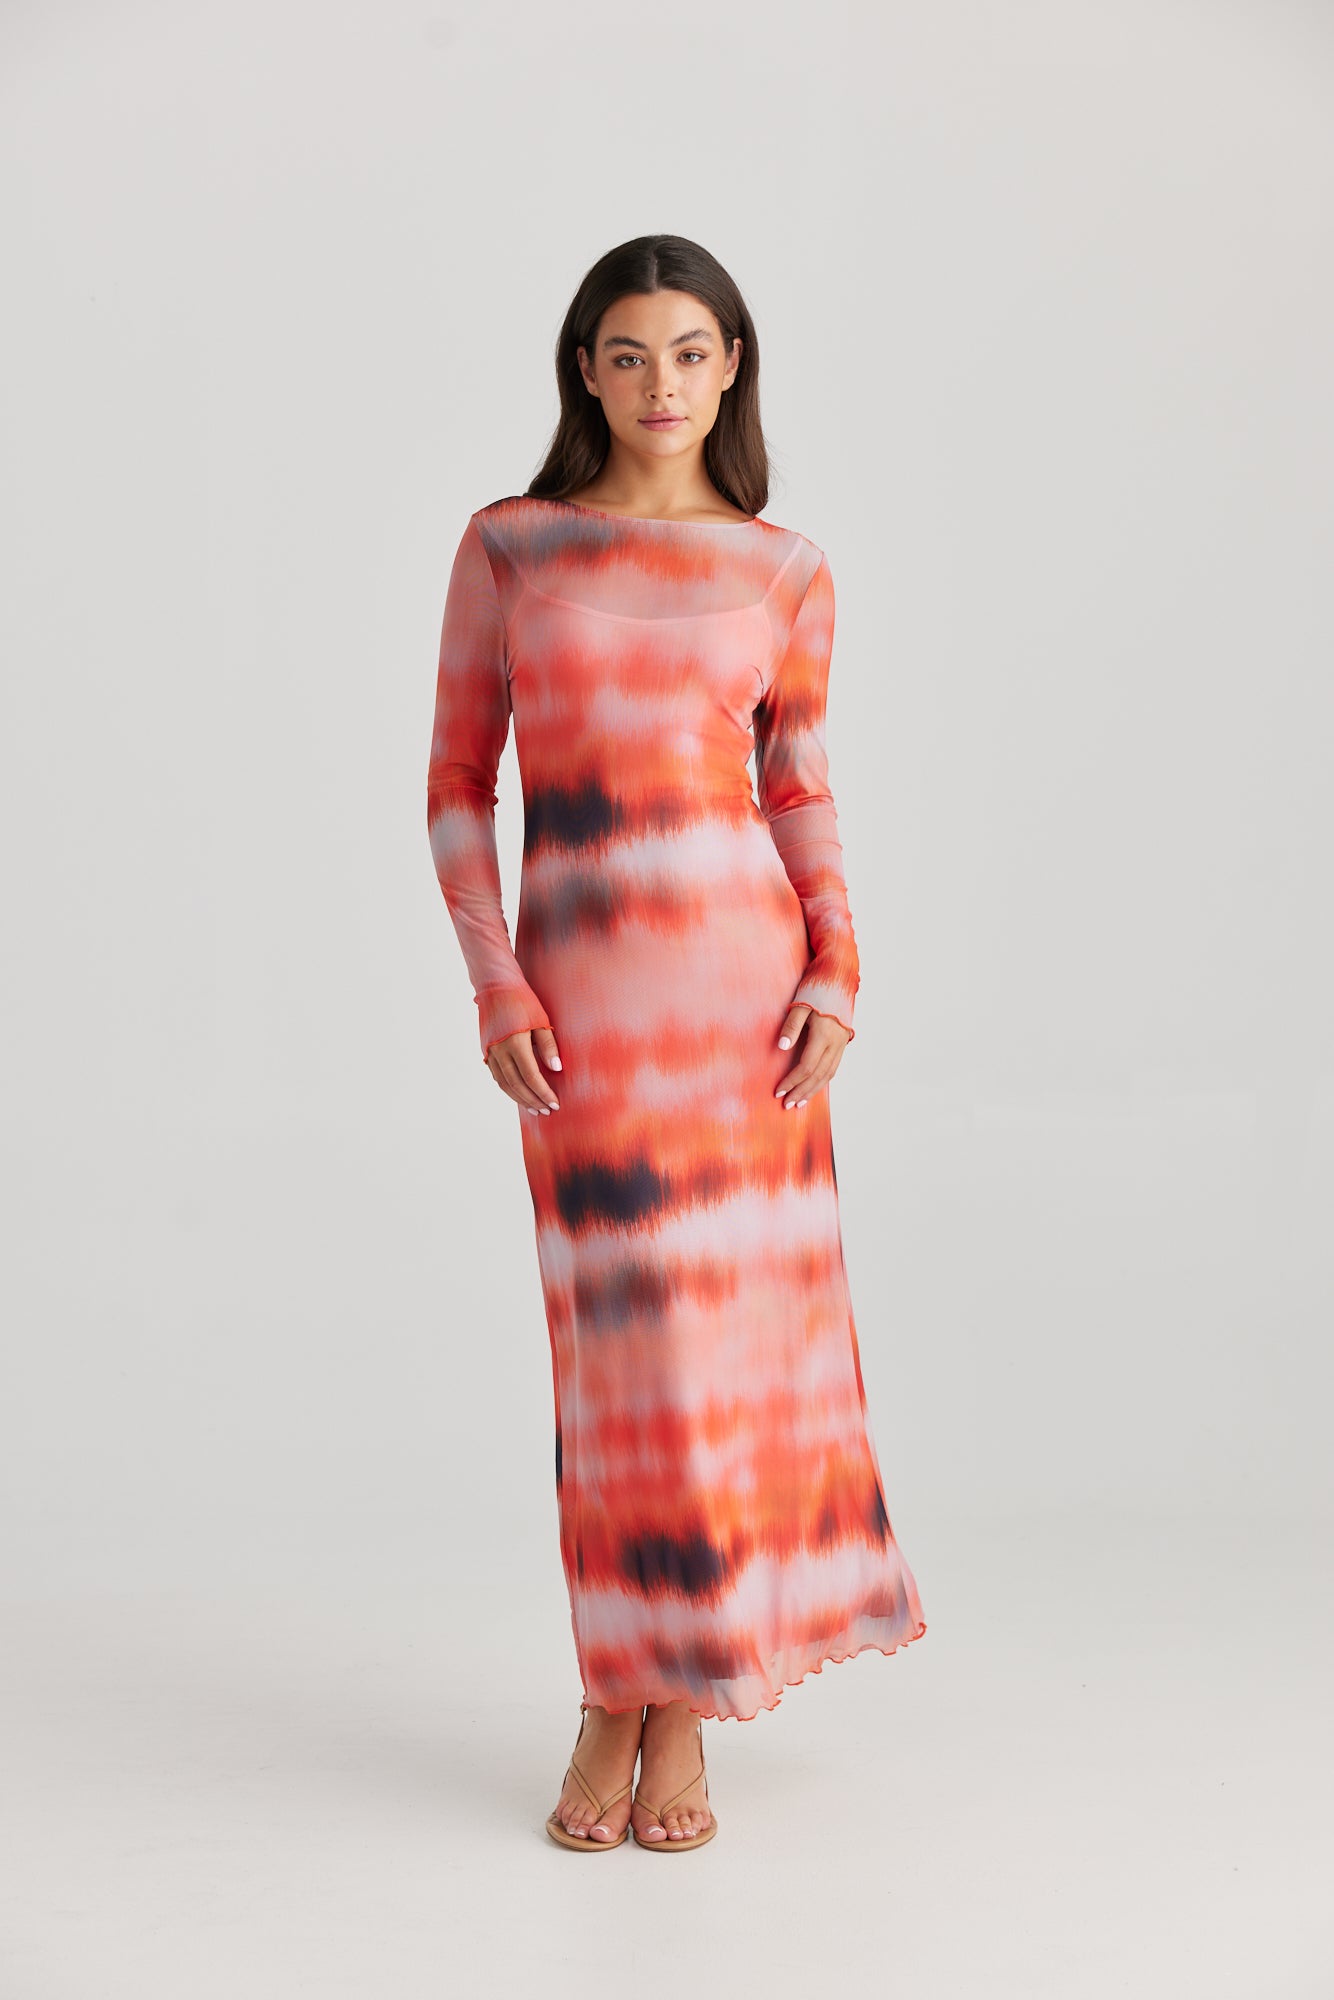 Marika Sleeveless Linen Dress by Ebby & I - Kindred Spirit